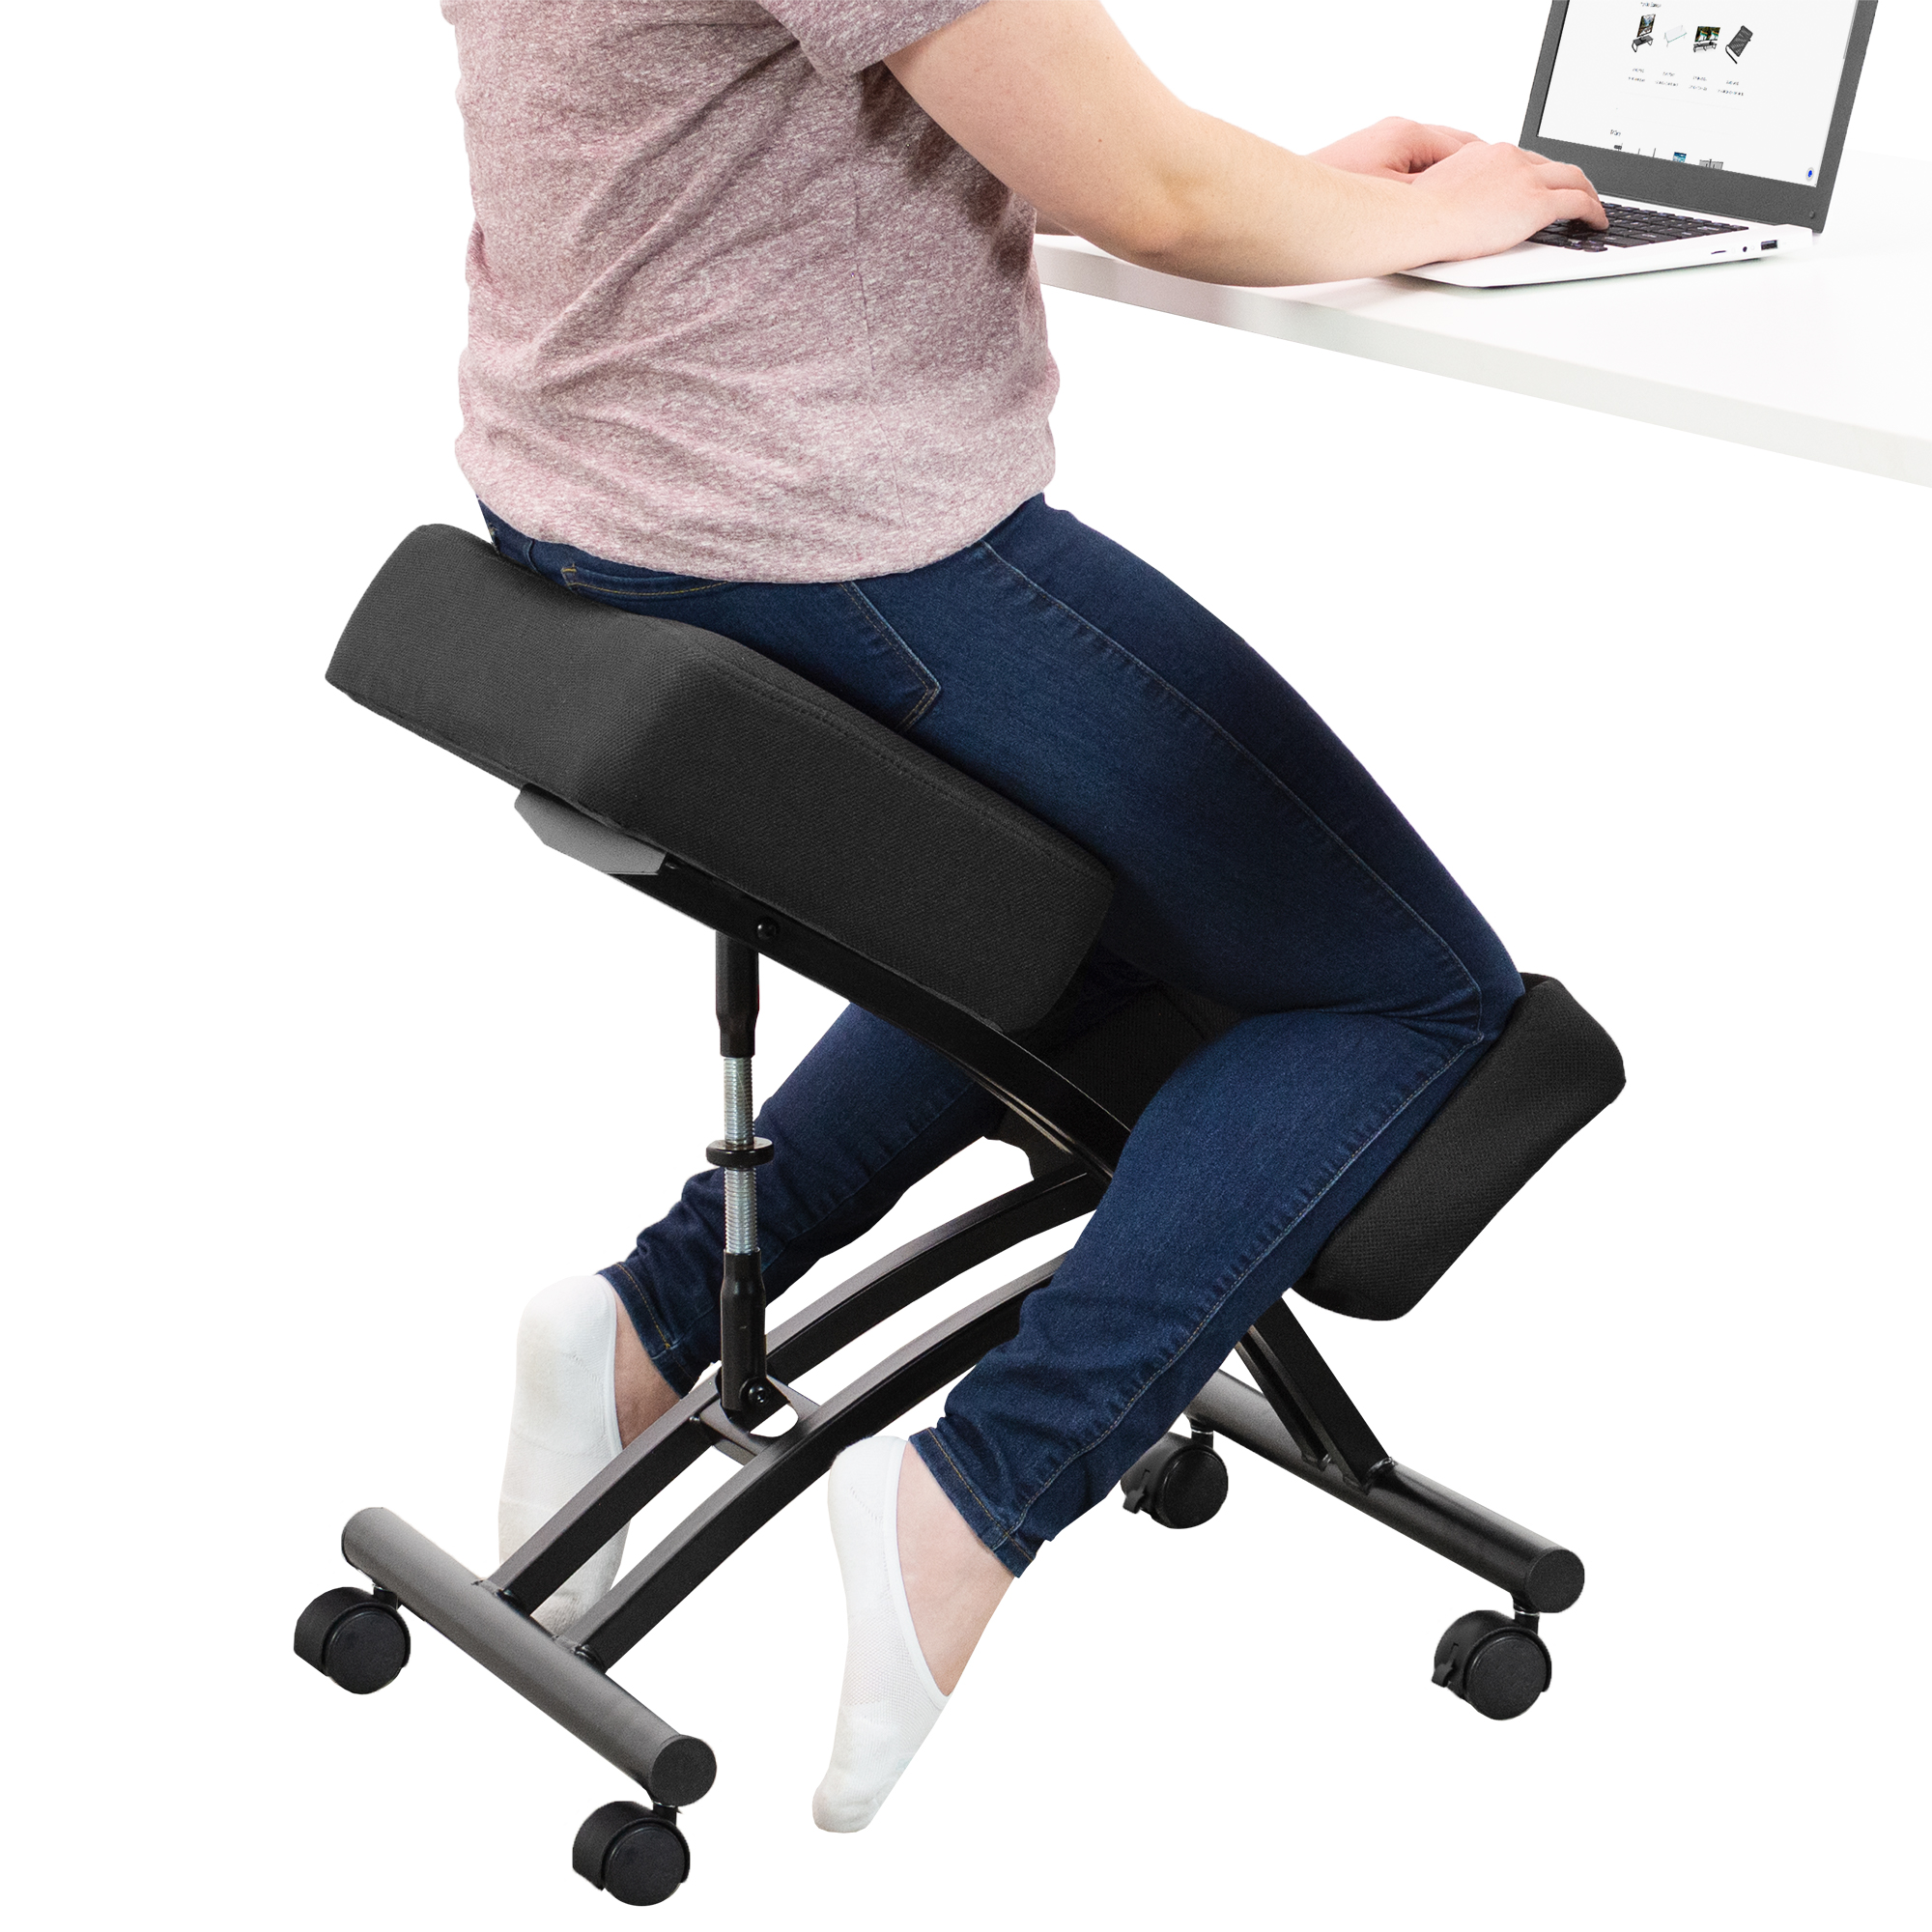 VIVO Black Ergonomic Kneeling Chair, Adjustable Stool for Home and